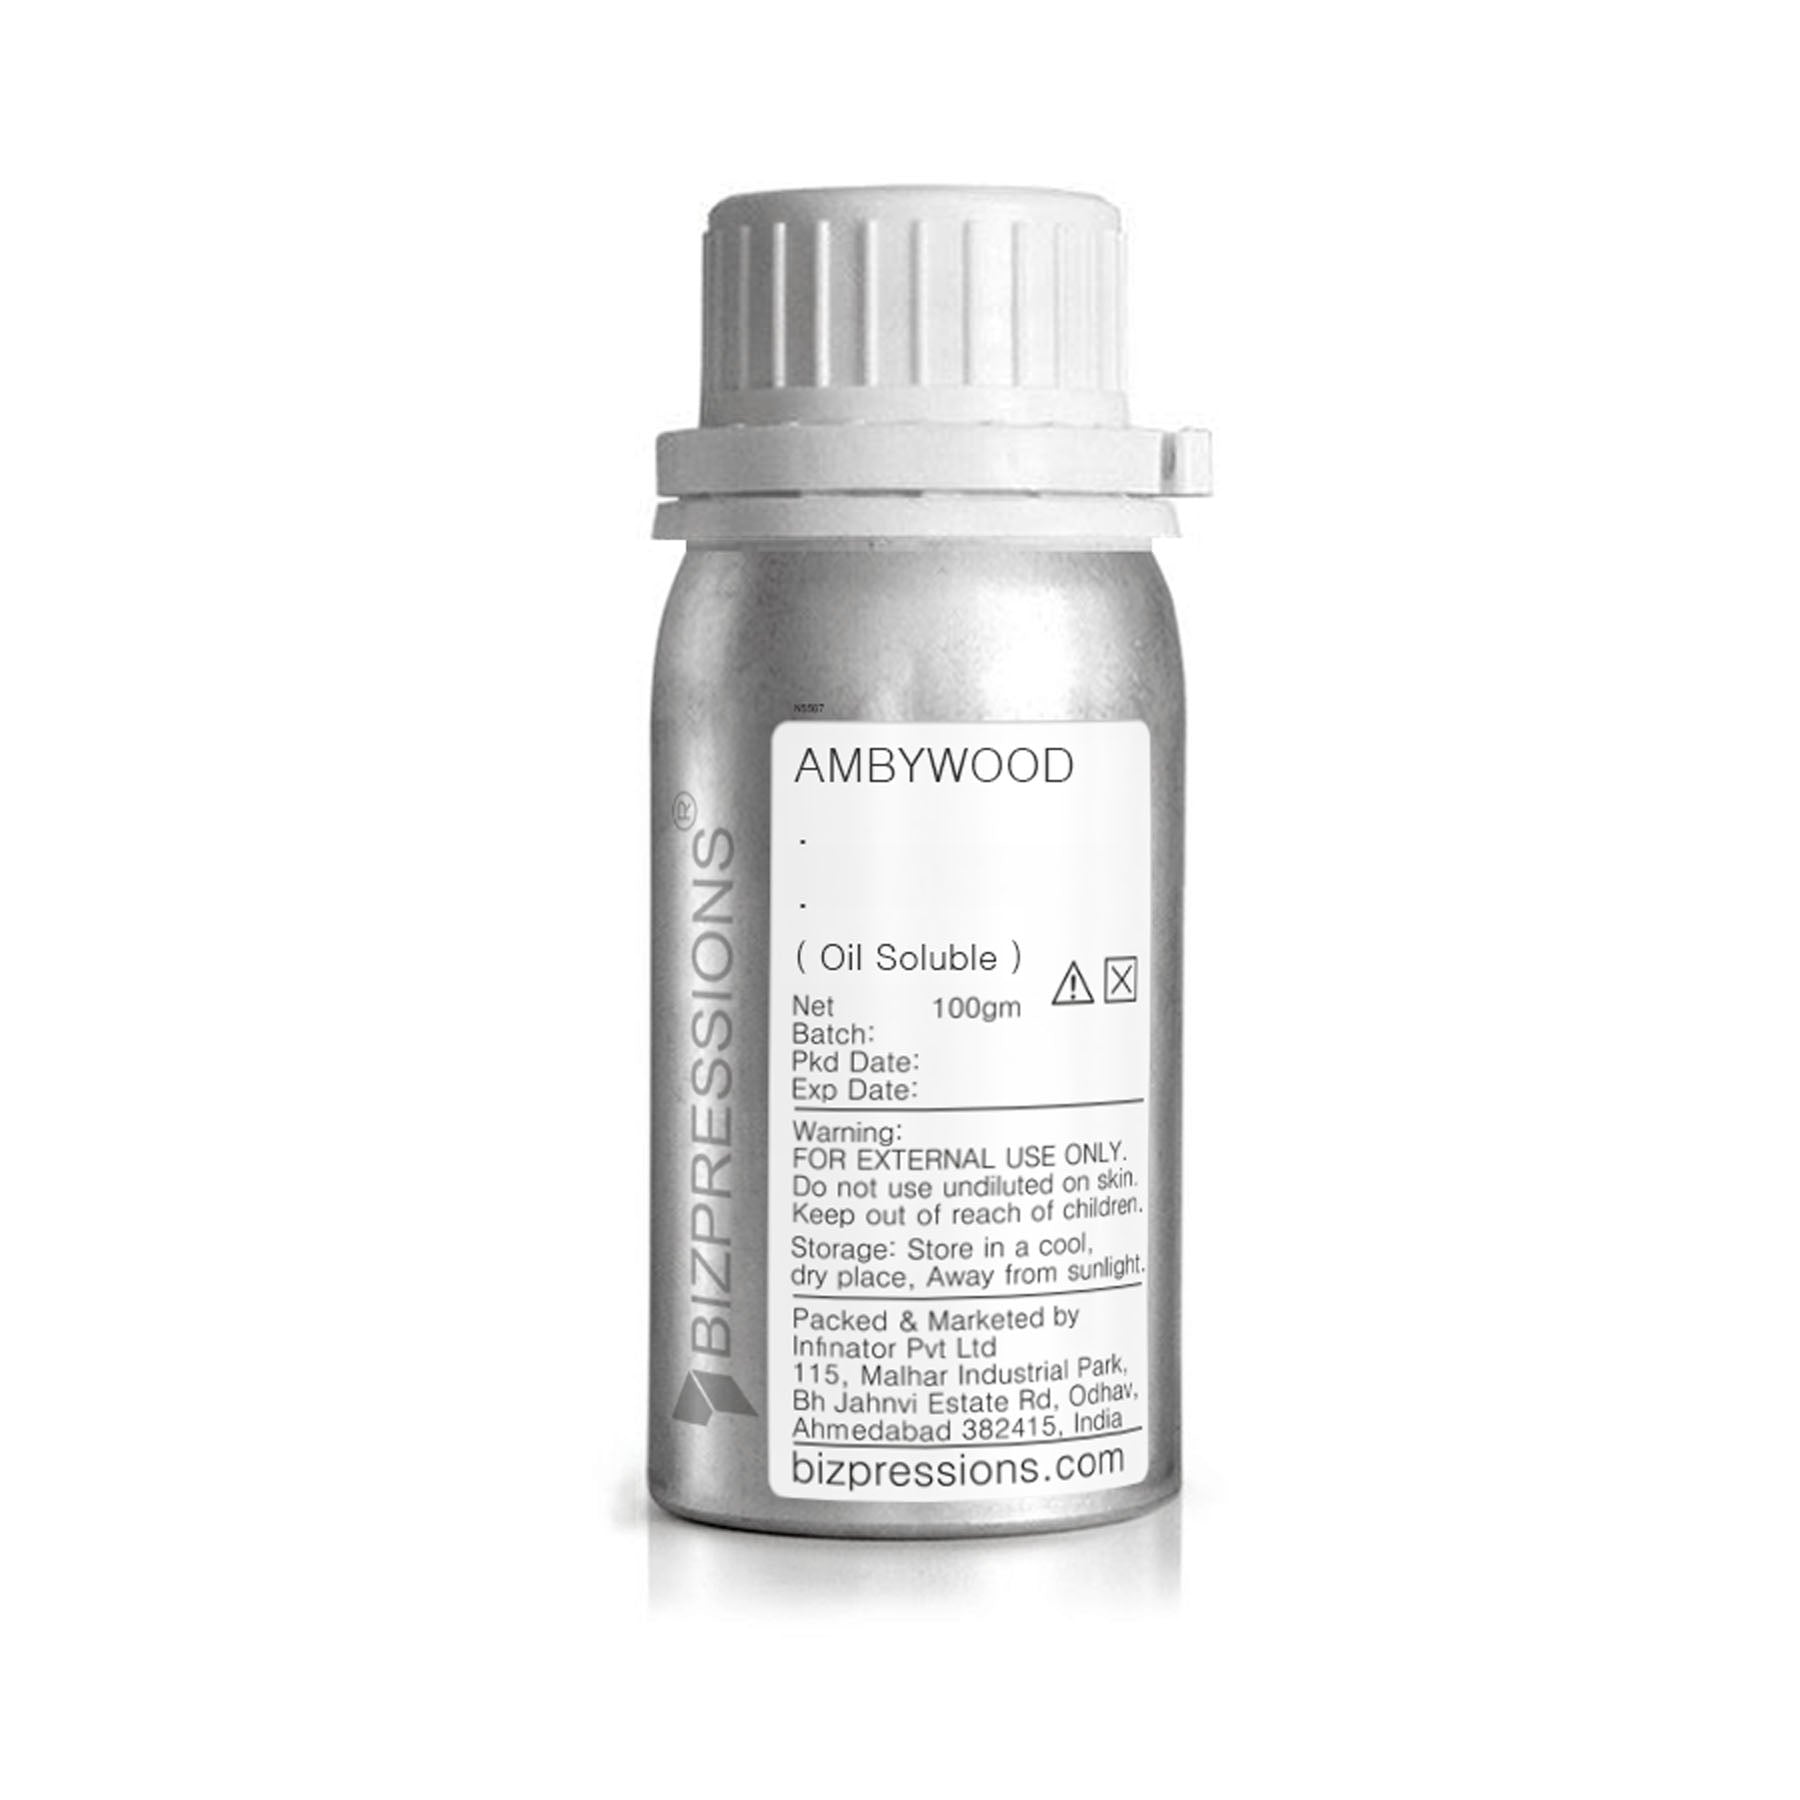 AMBYWOOD - Fragrance ( Oil Soluble ) - 100 gm